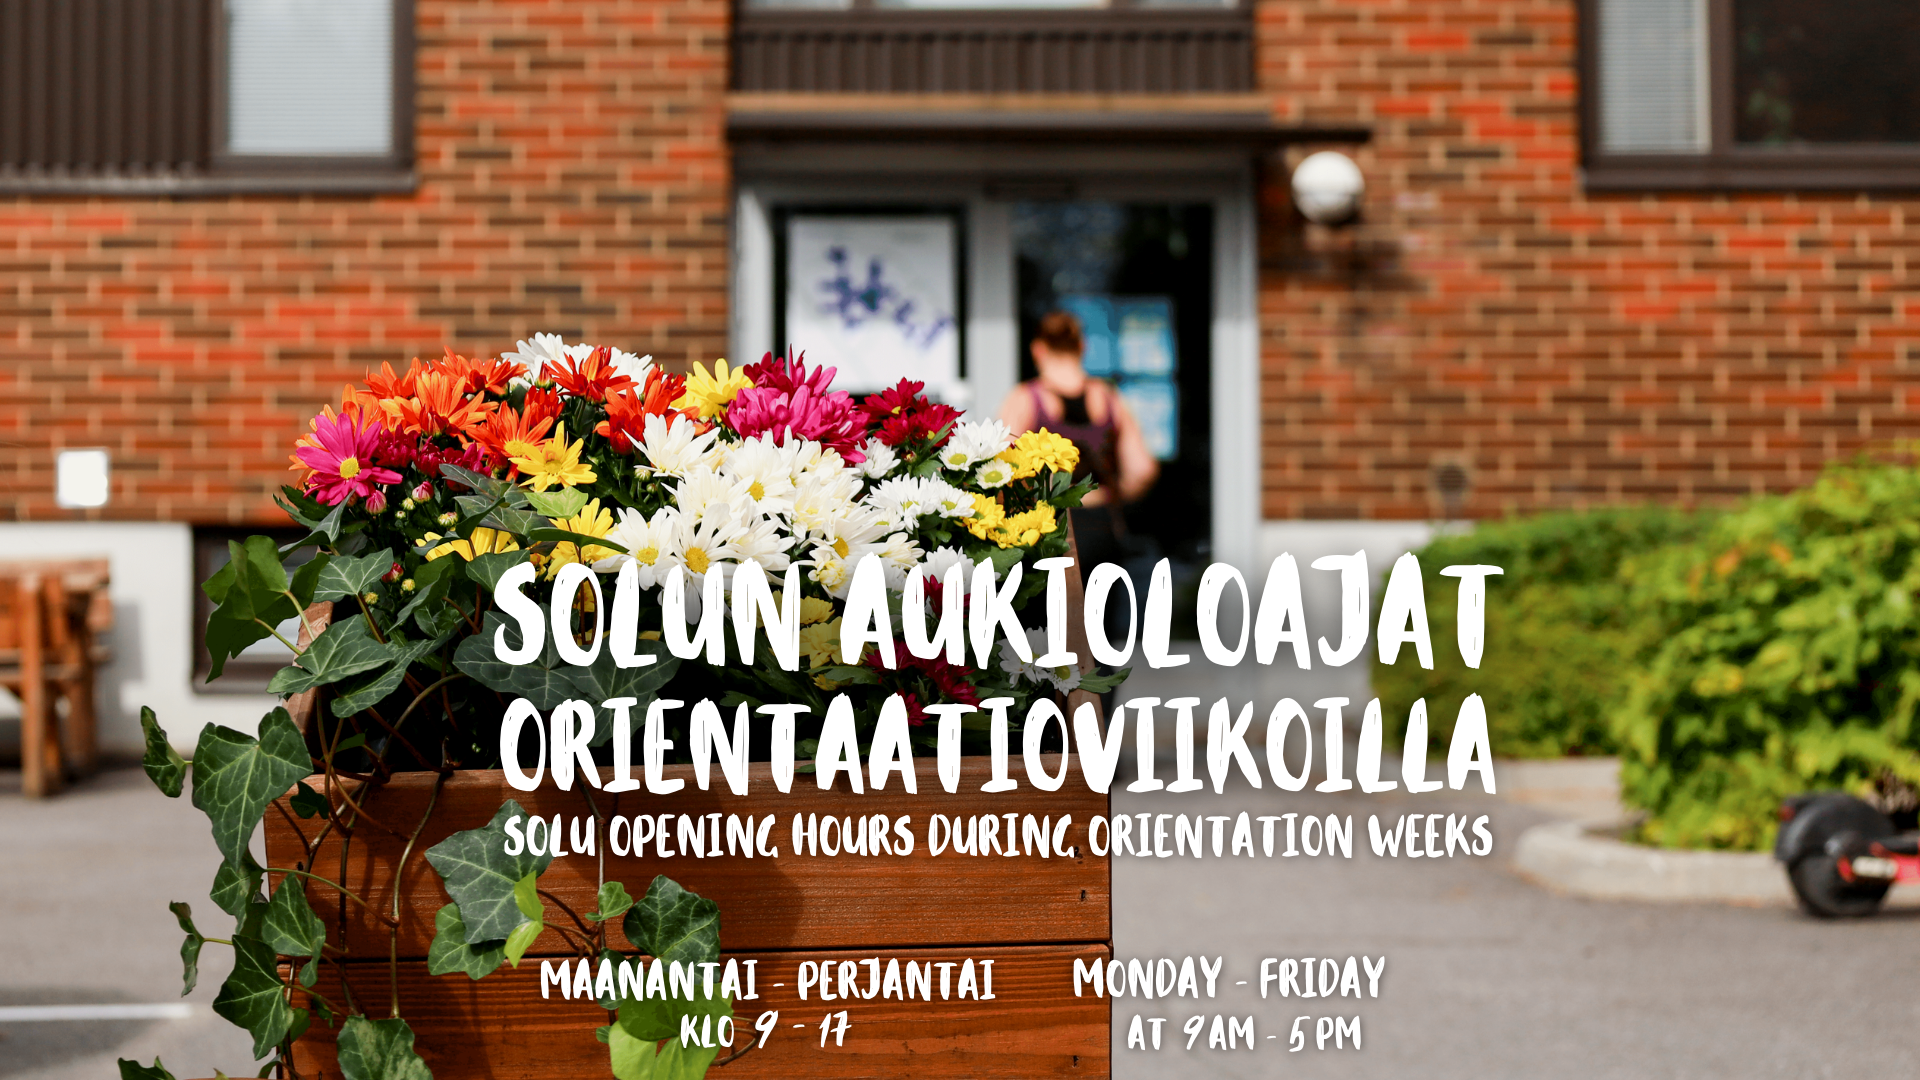 Extended Solu opening hours during orientation weeks